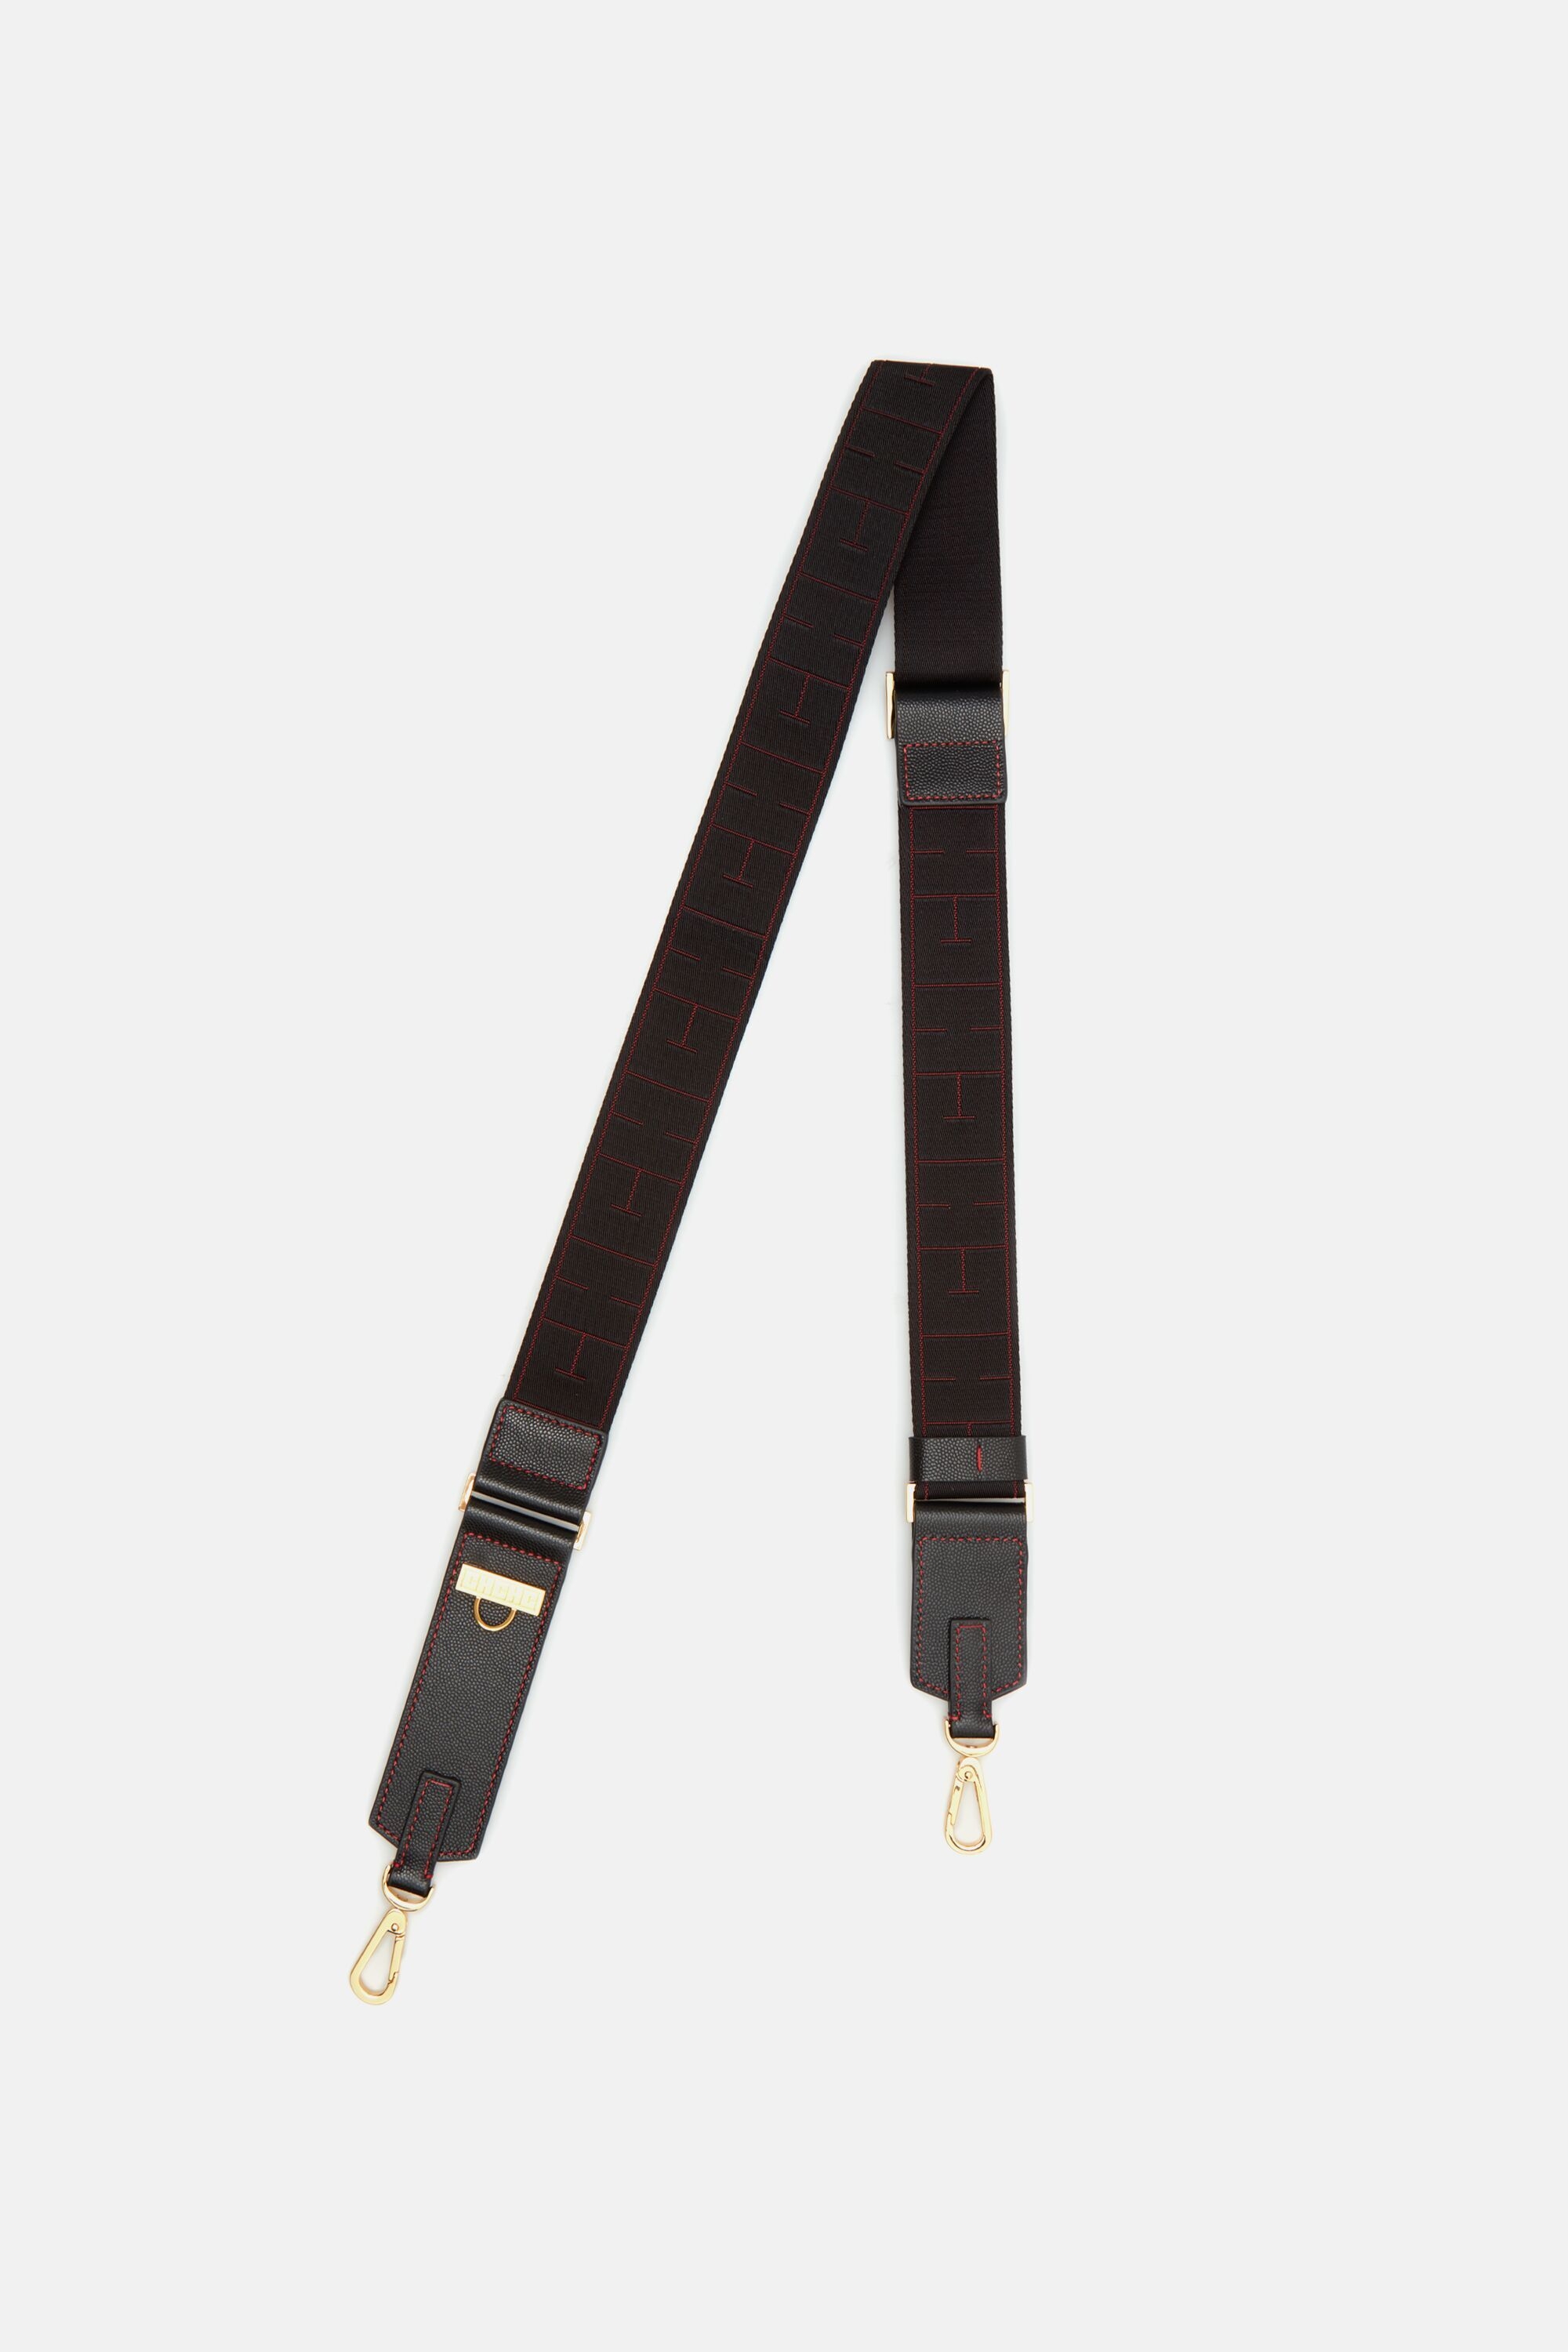 Bimba  Adjustable leather crossbody strap